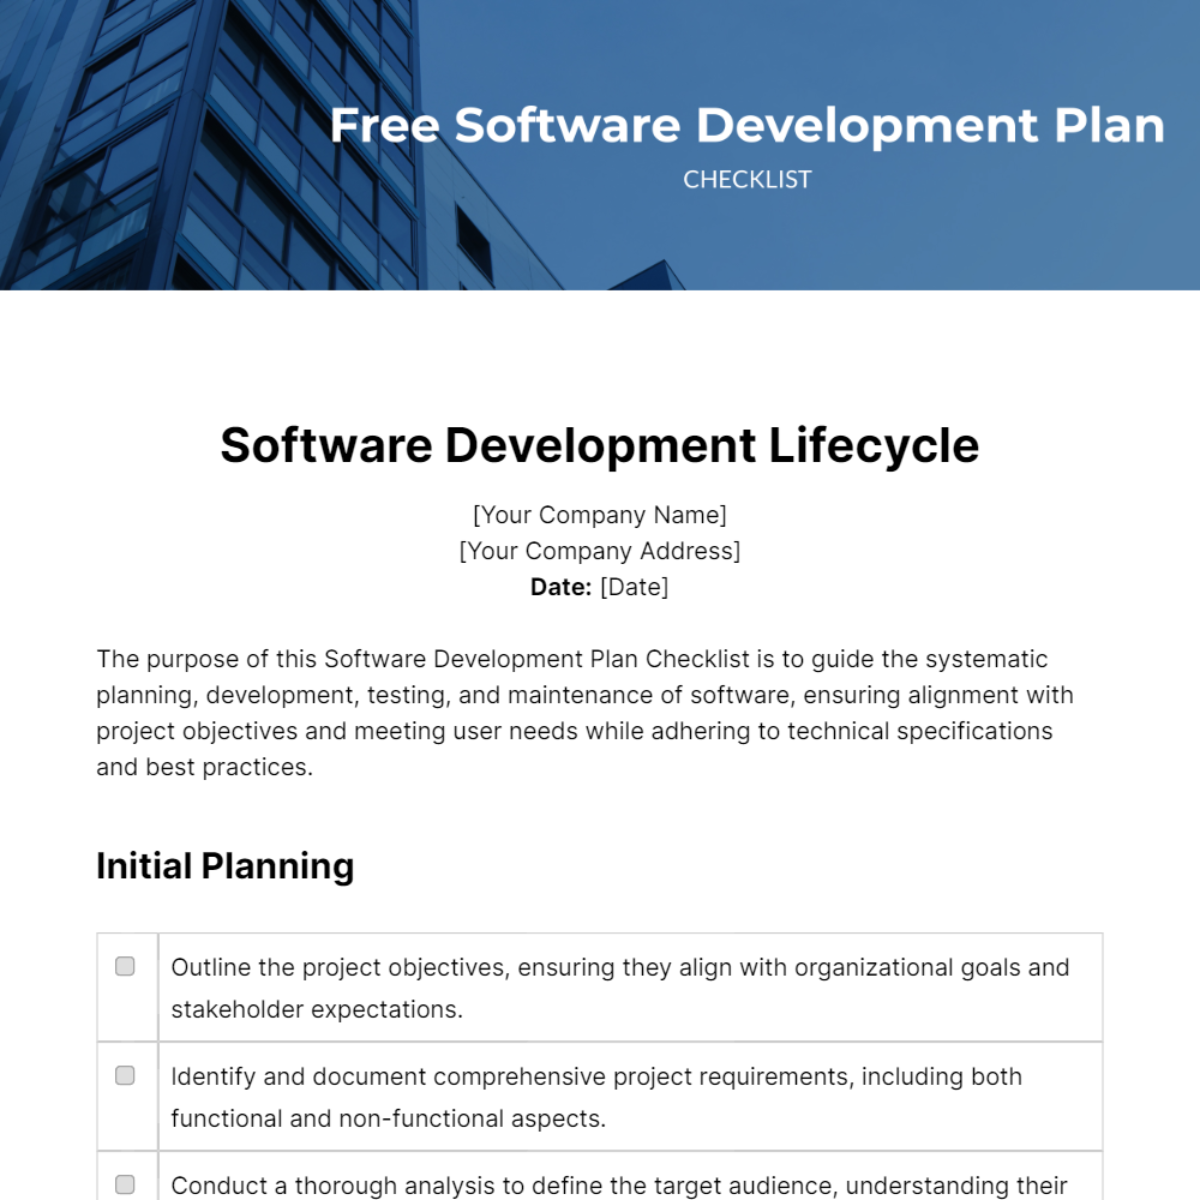 Free Software Development Plan Checklist Template